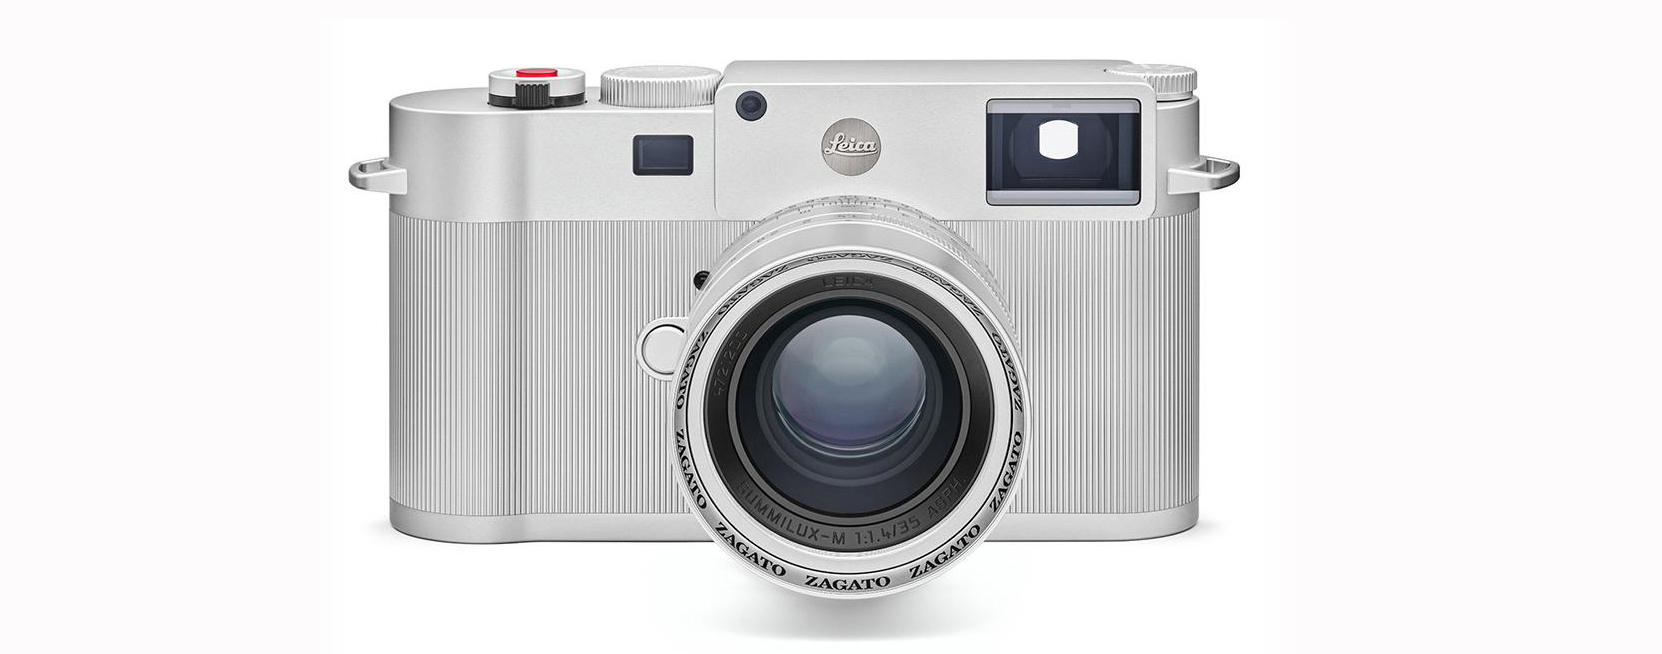 Đang tải Leica-M10-zagato-limited-edition-camera.jpg…